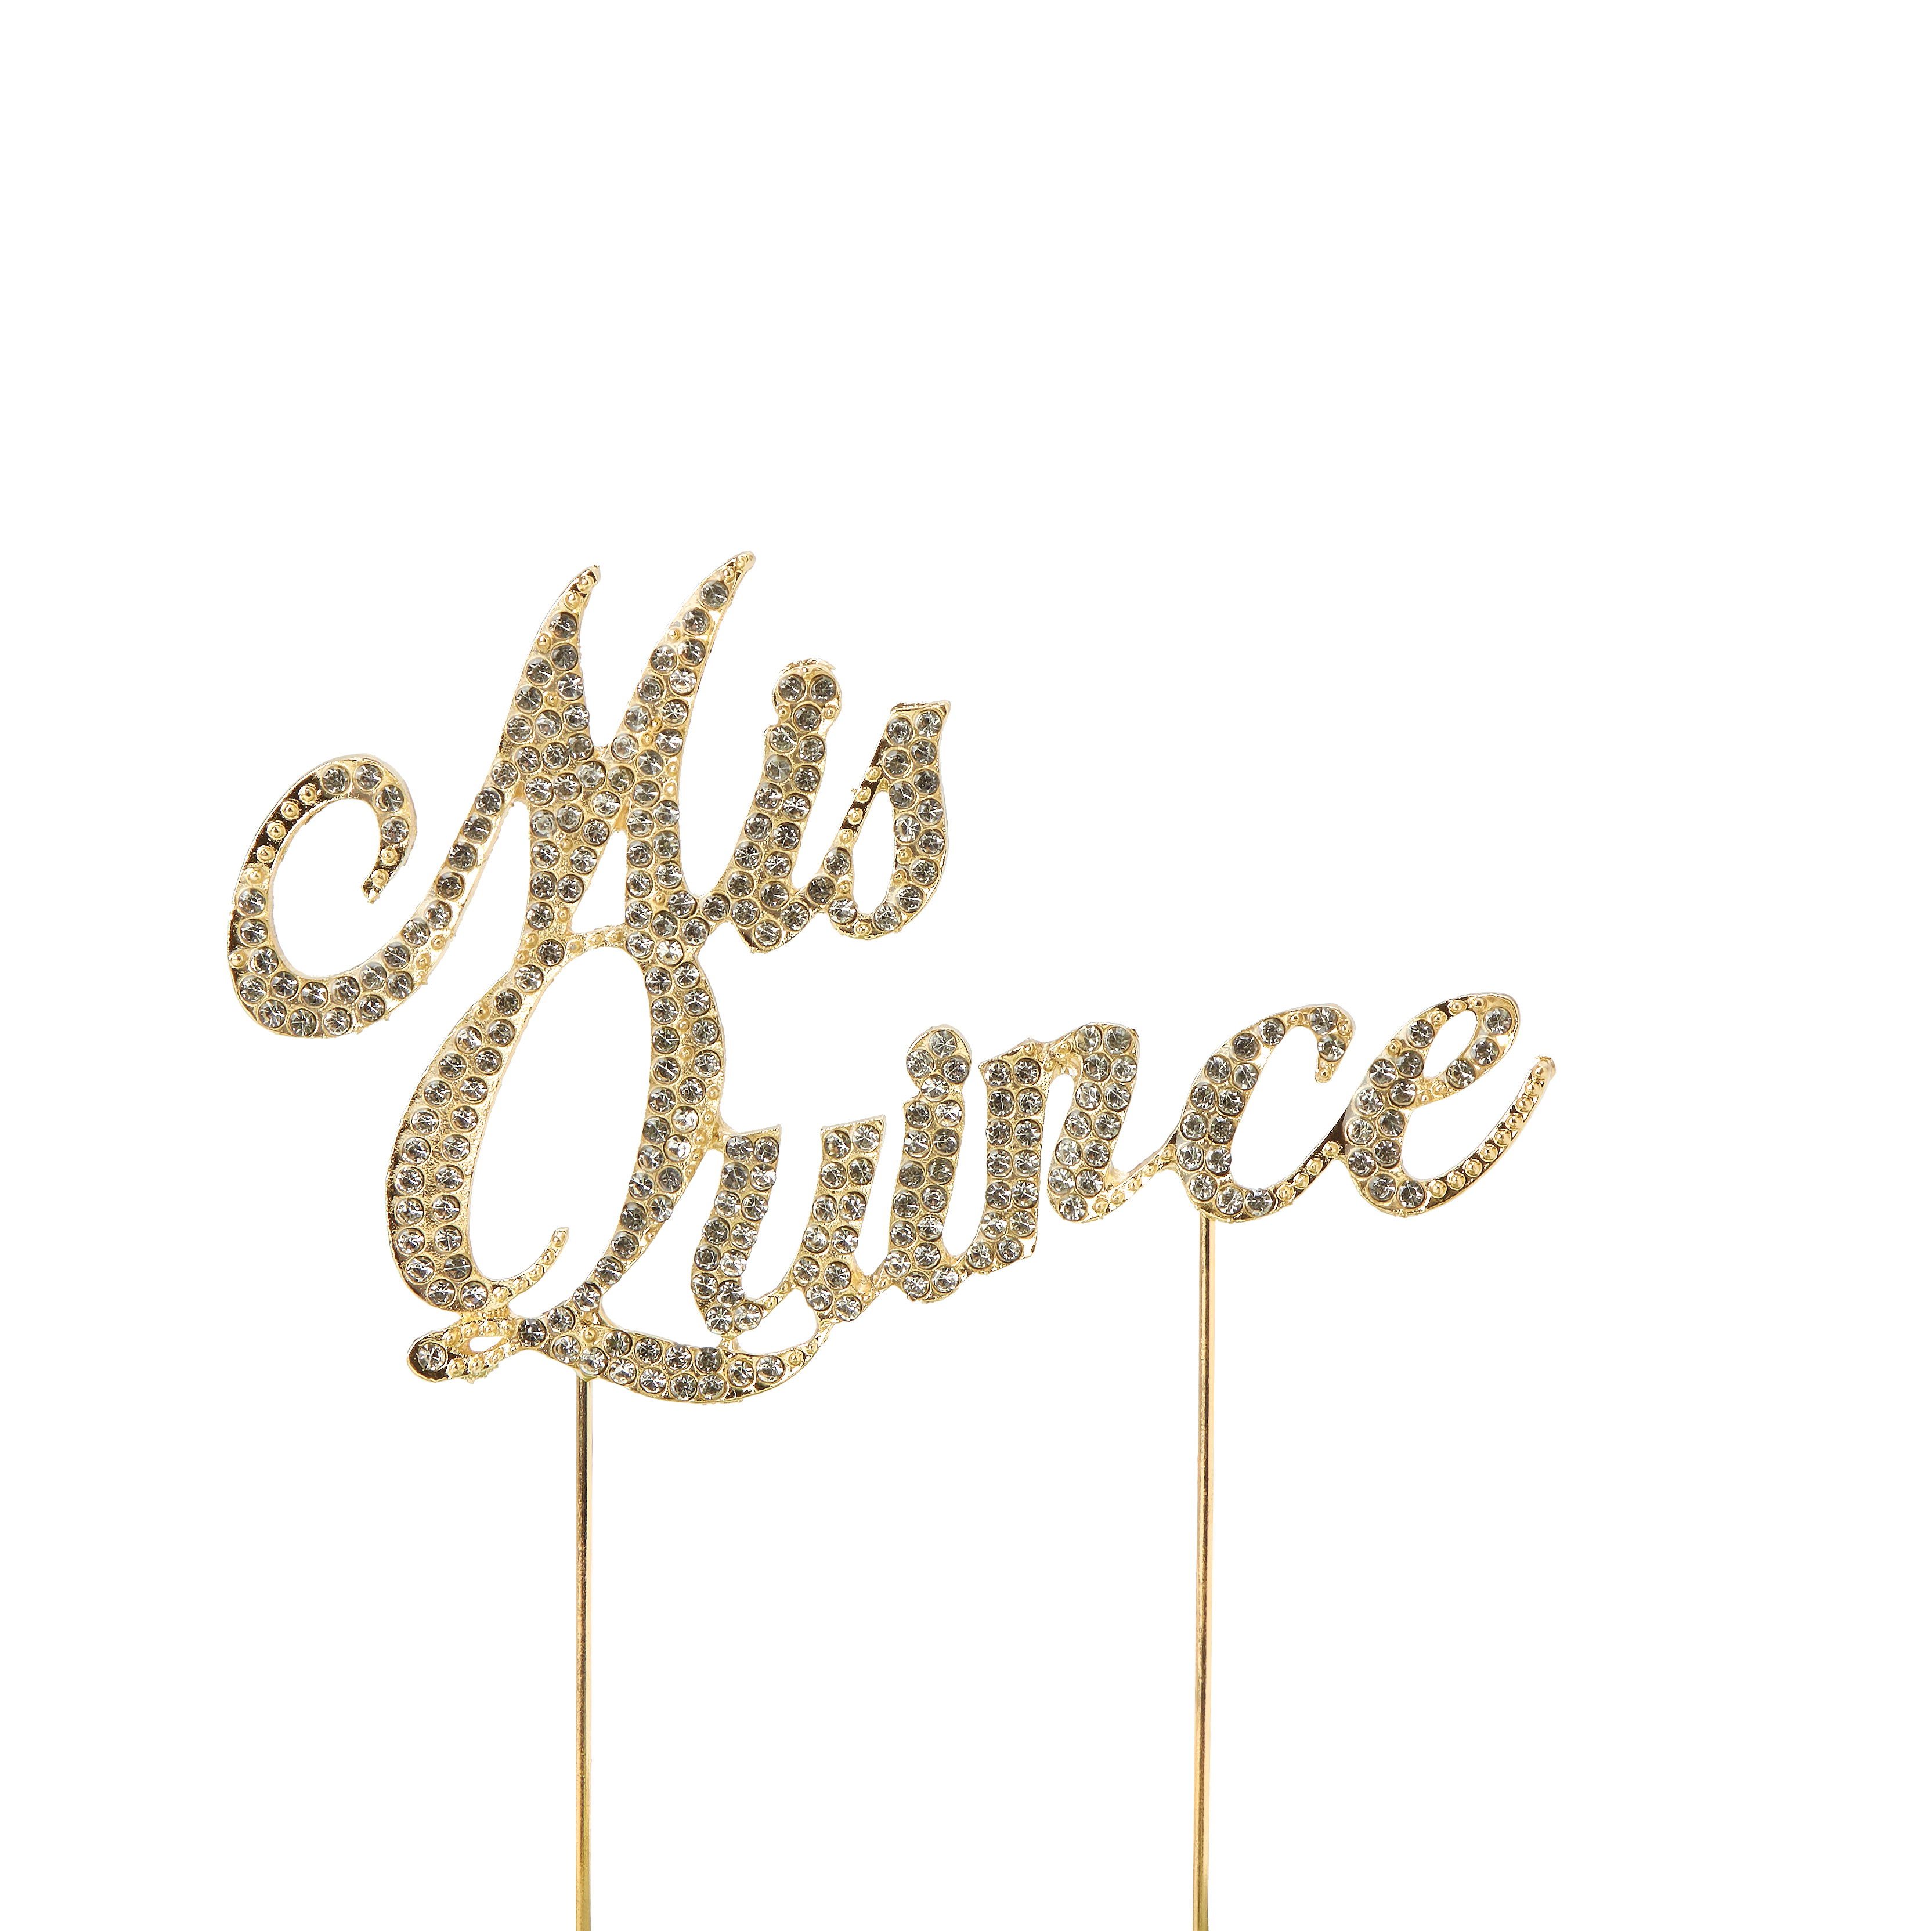 Rhinestone Cake Topper - "Mis Quince" - Gold